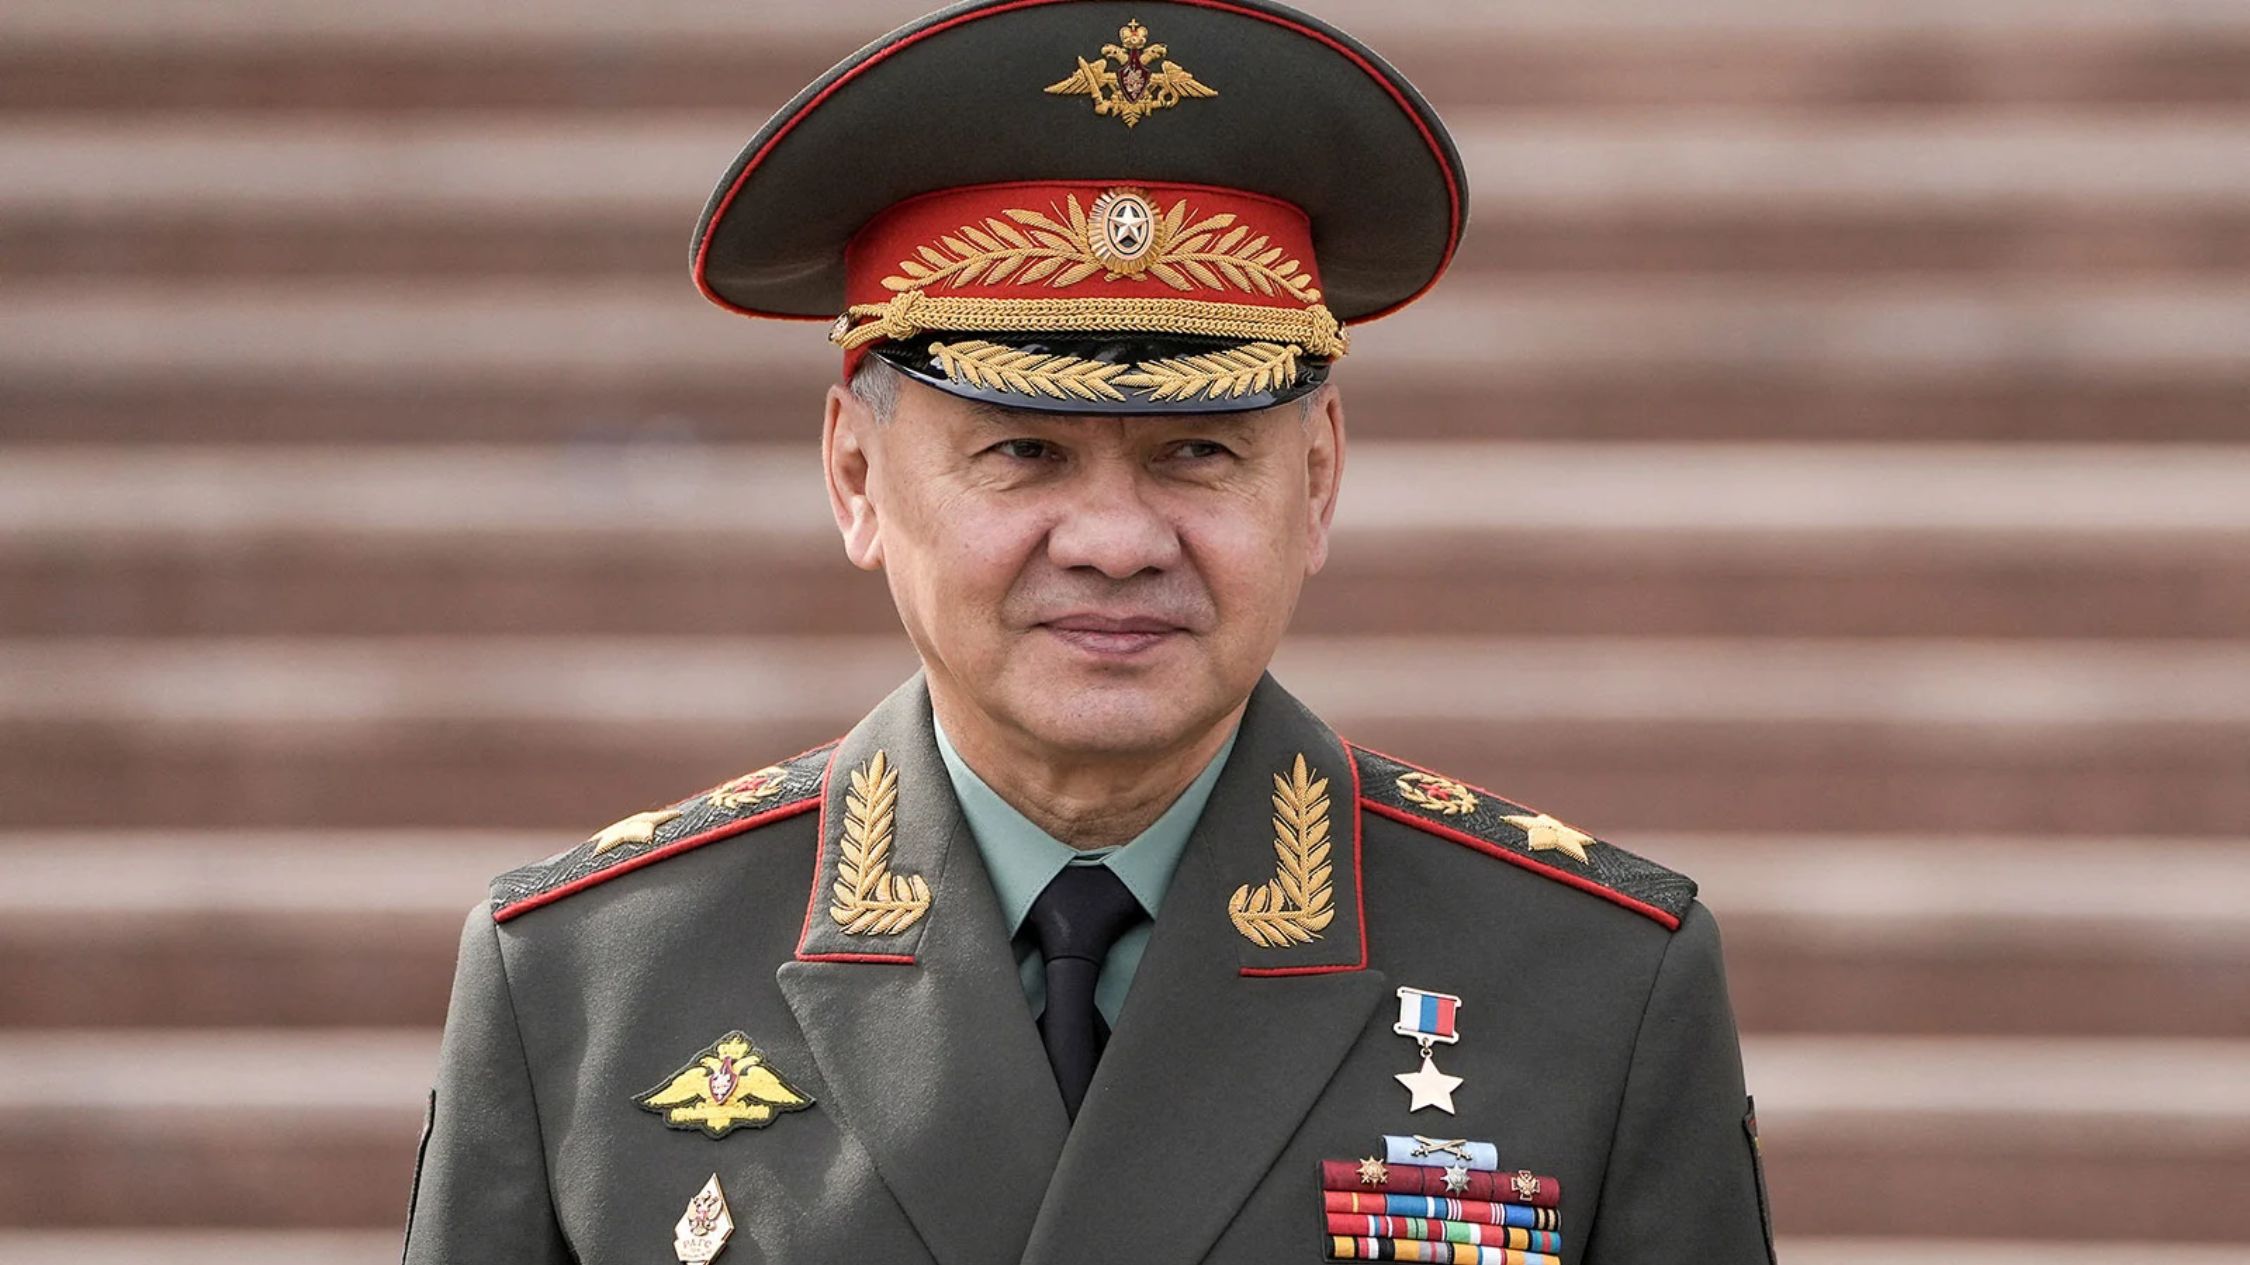 Putin replaces Sergei Shoigu, Russian Defense Minister